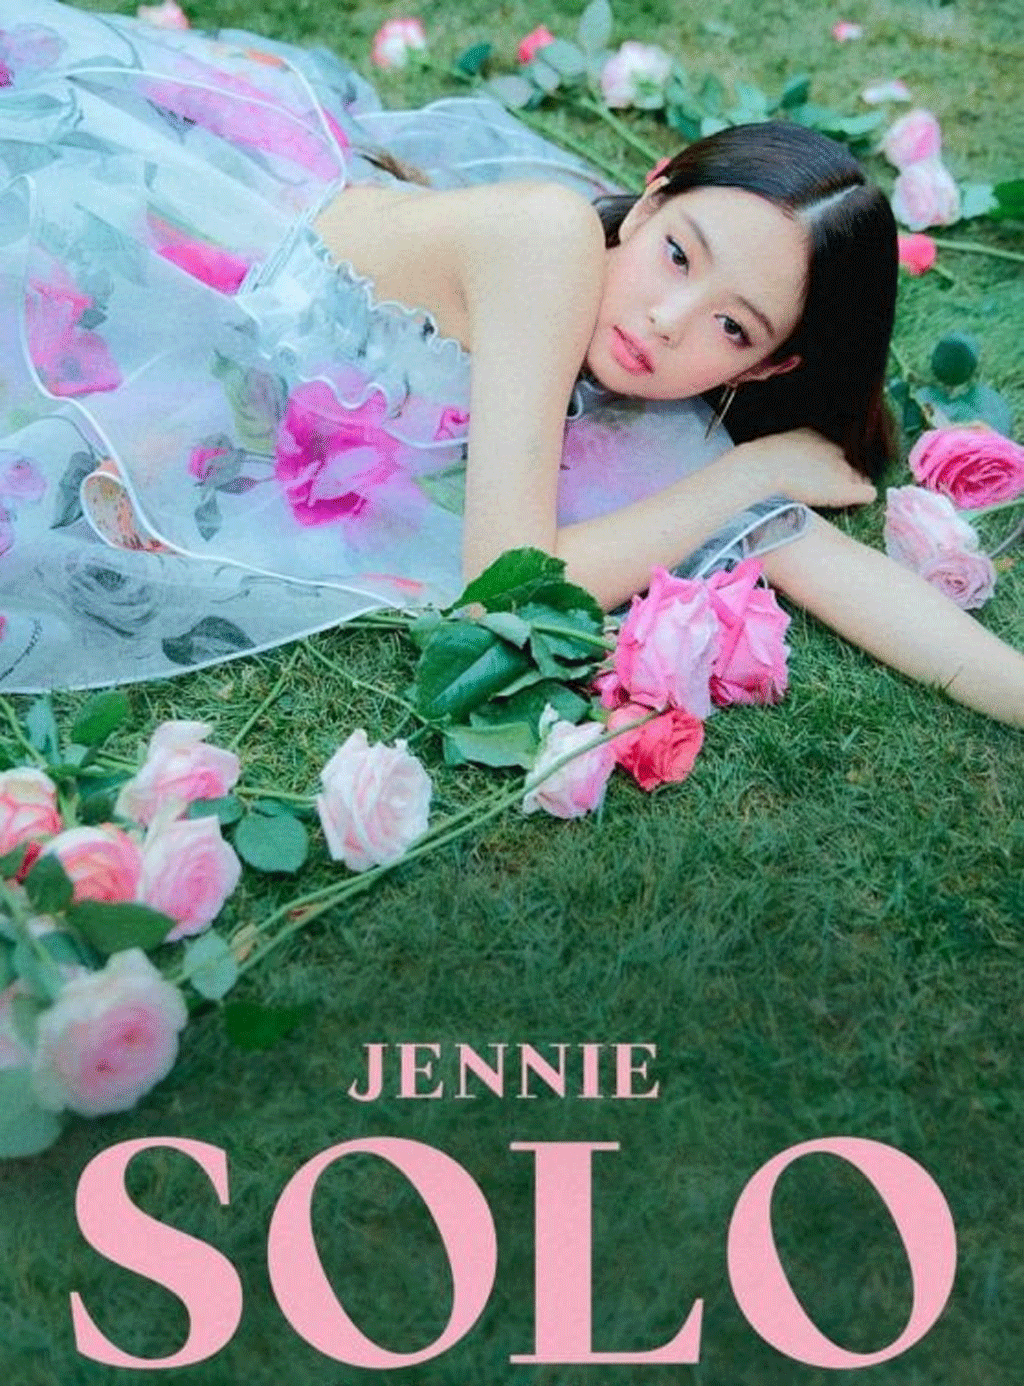 Jennie vượt mặt PSY trên Spotify với ca khúc SOLO2